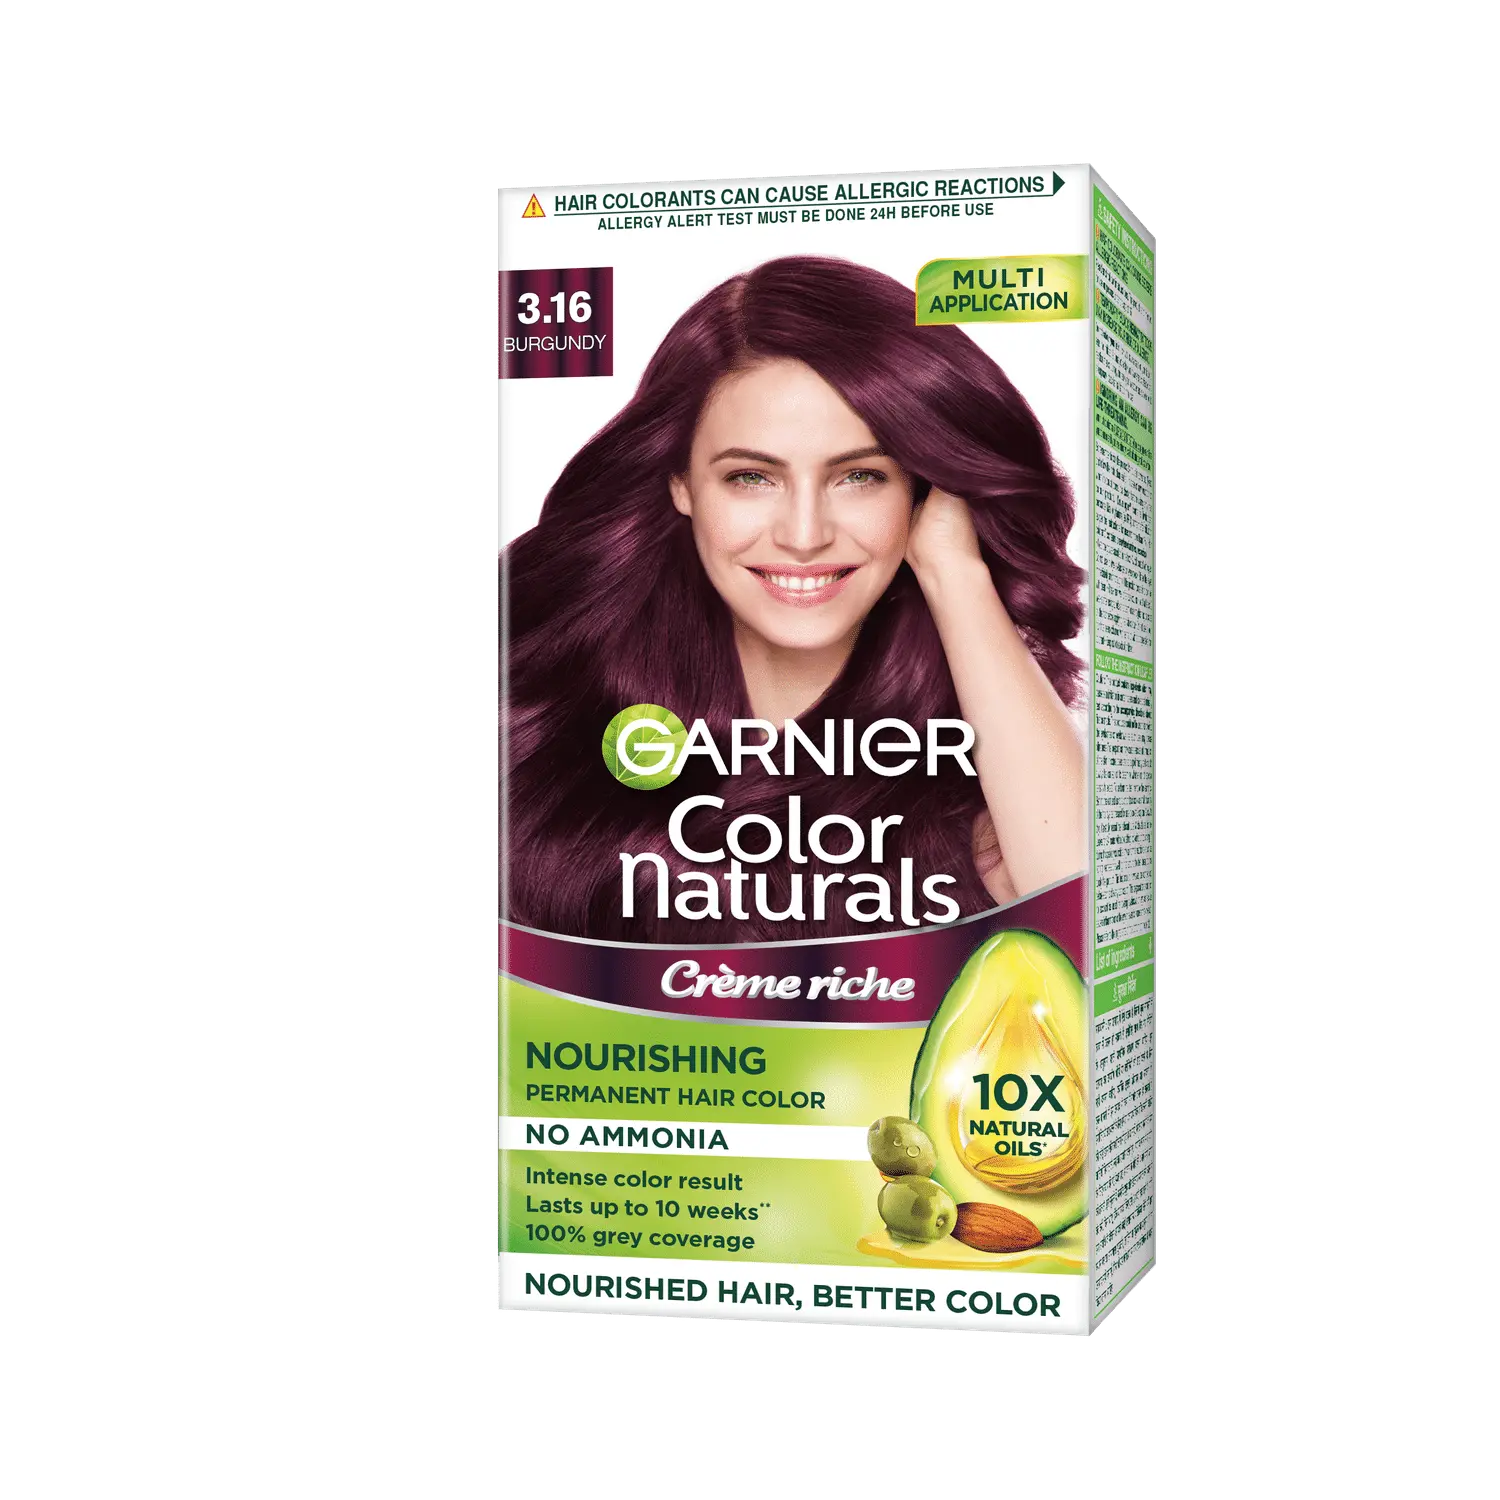 Garnier Color Naturals Creme hair color, Shade 3.16 Burgundy (70 ml + 60 g)